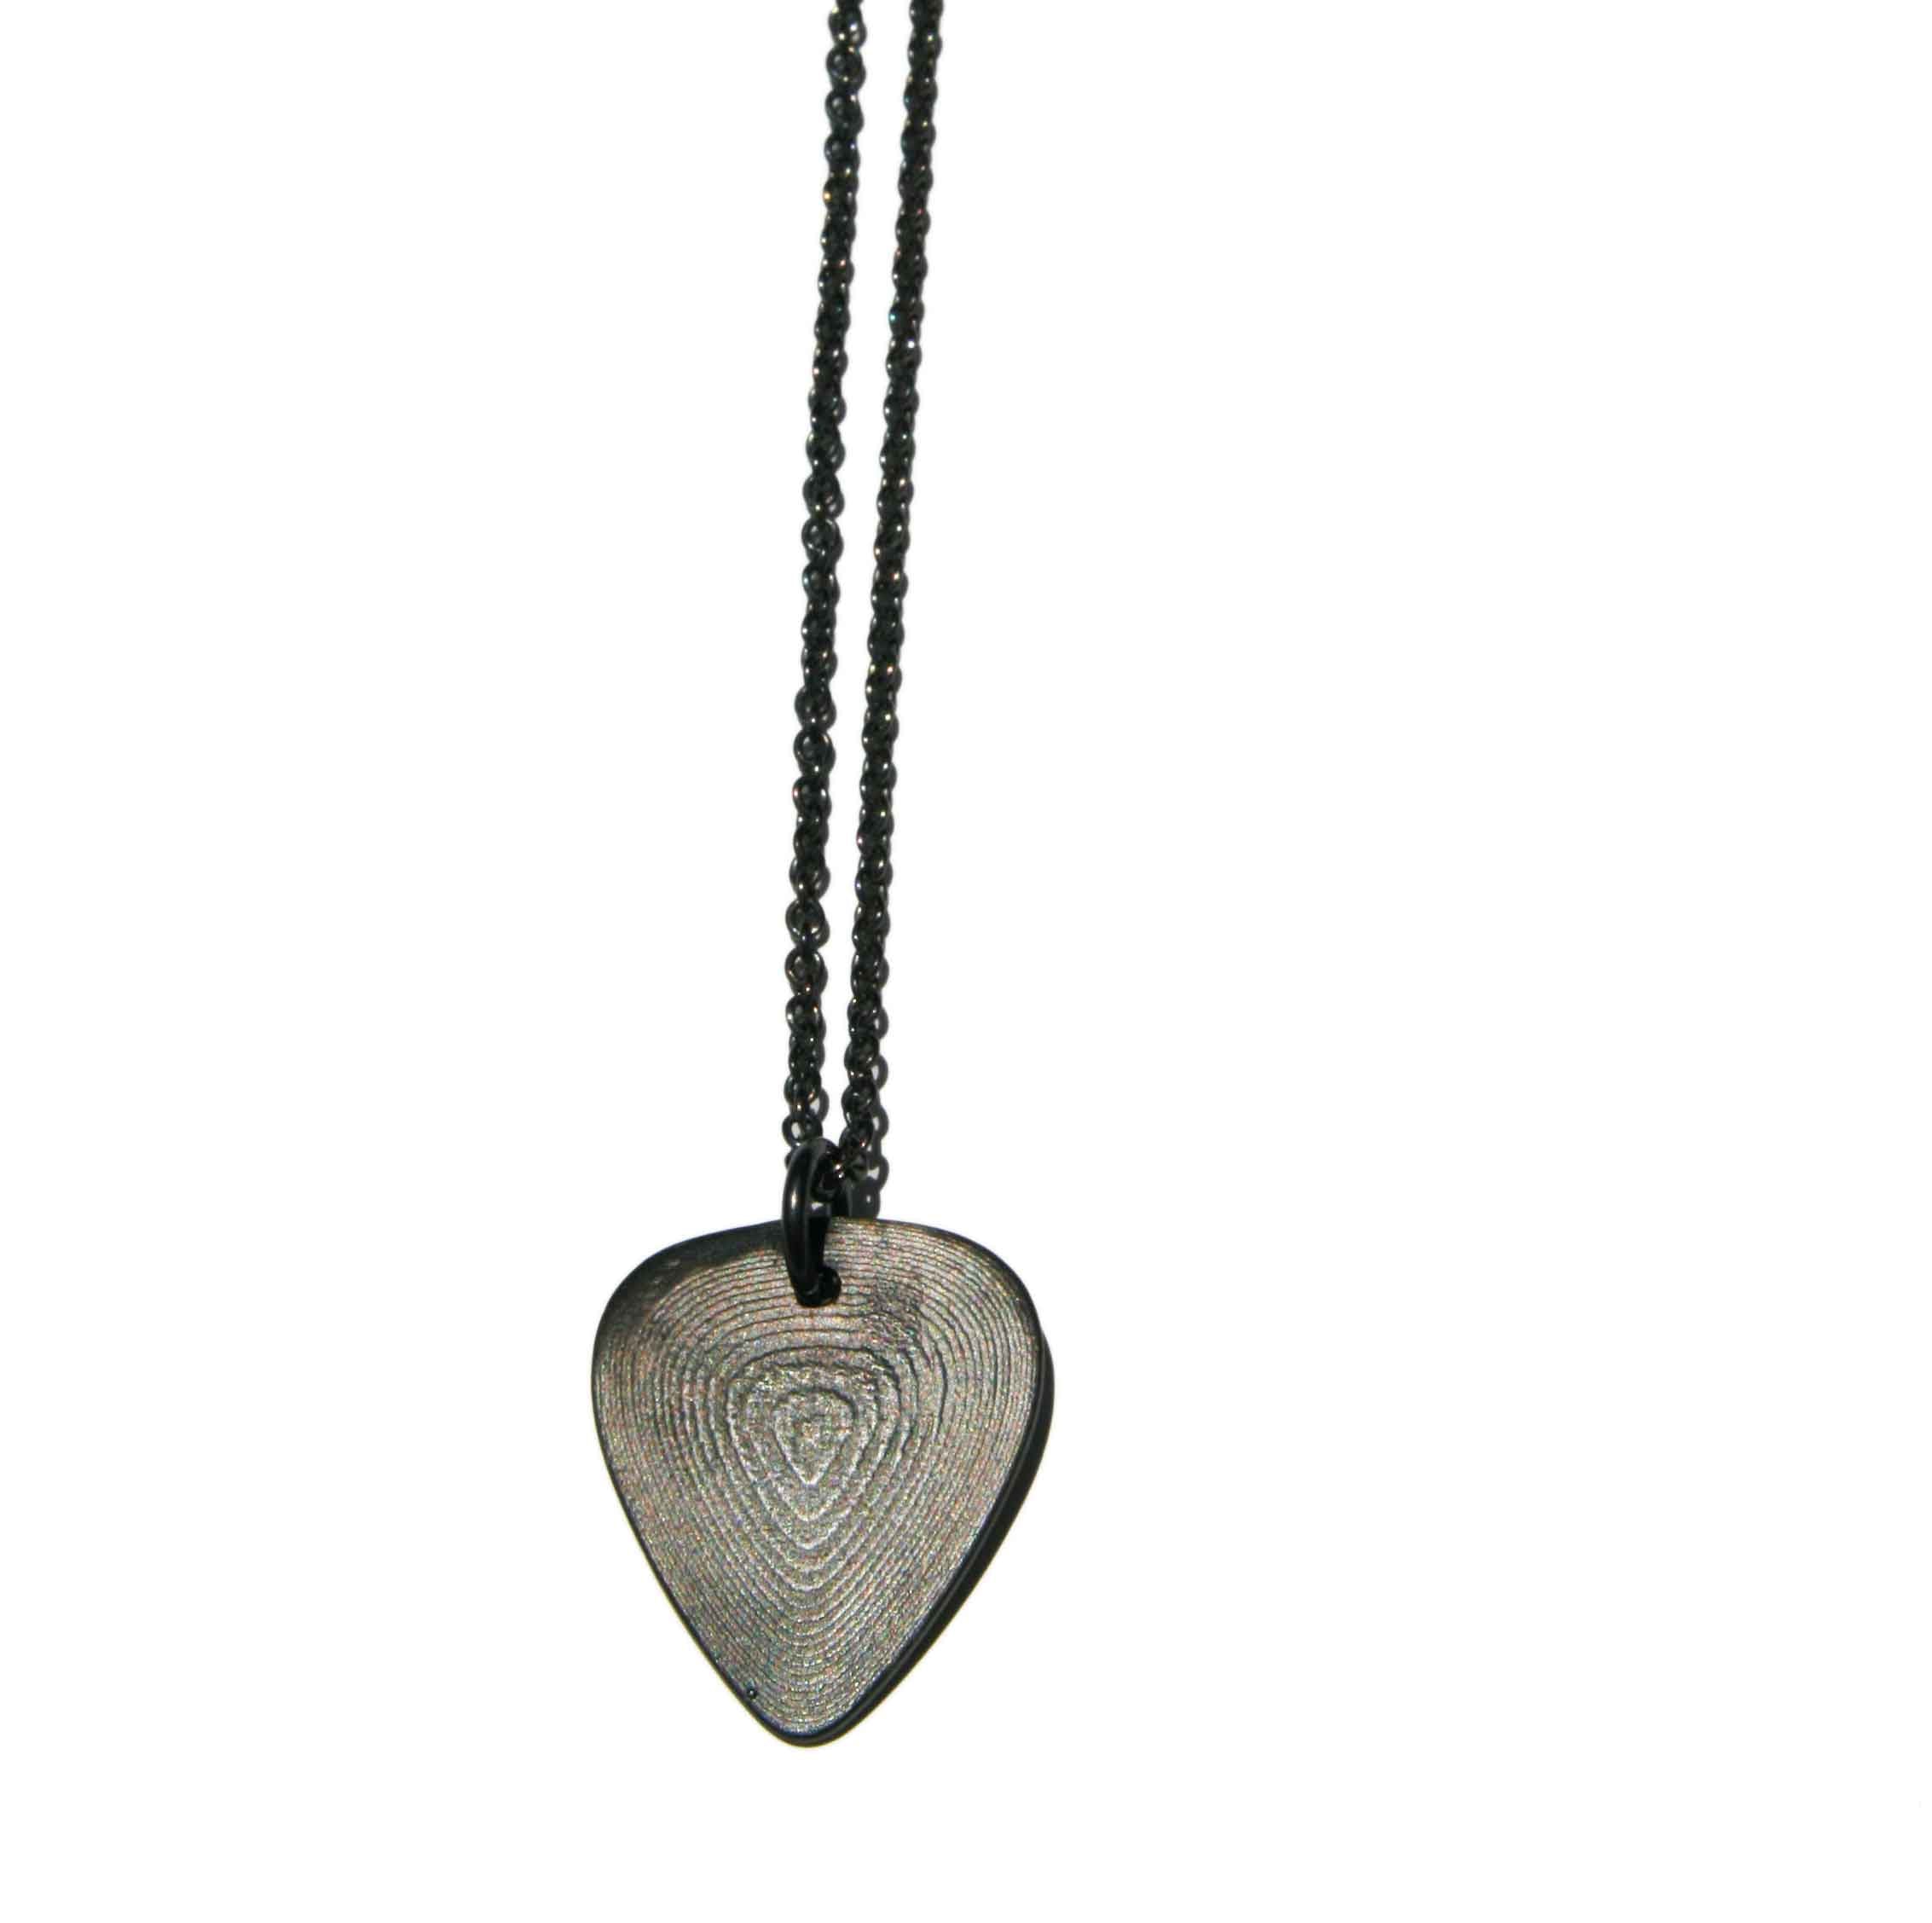 Oxidised silver Plectrum necklace